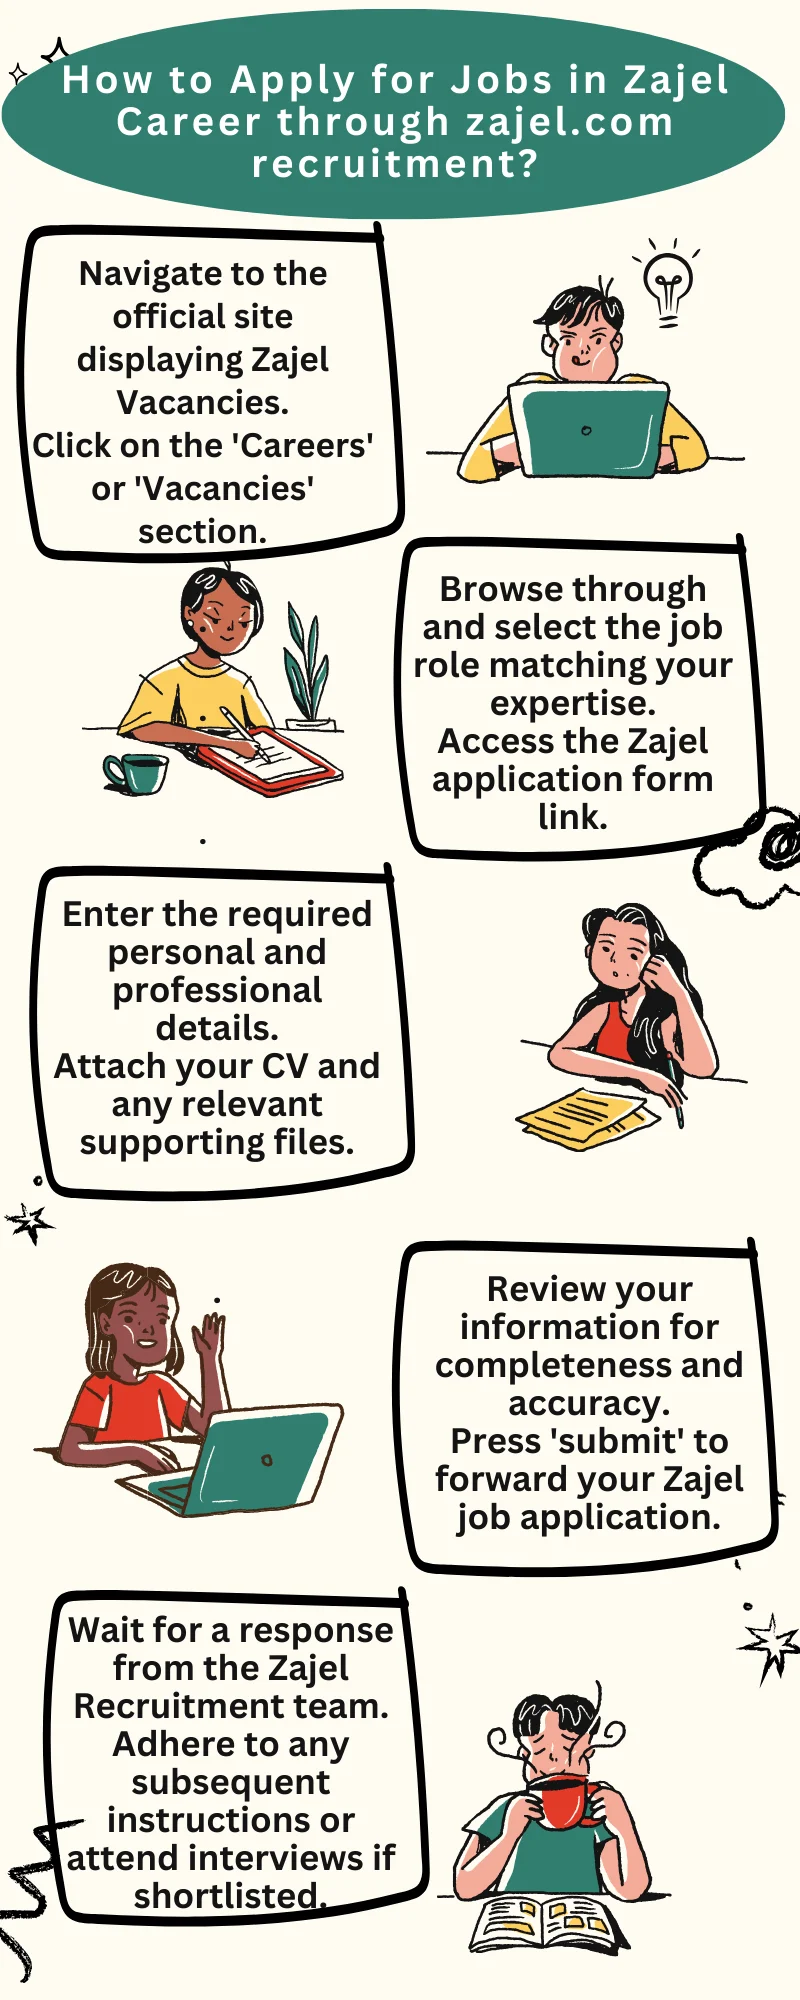 How to Apply for Jobs in Zajel Career through zajel.com recruitment?